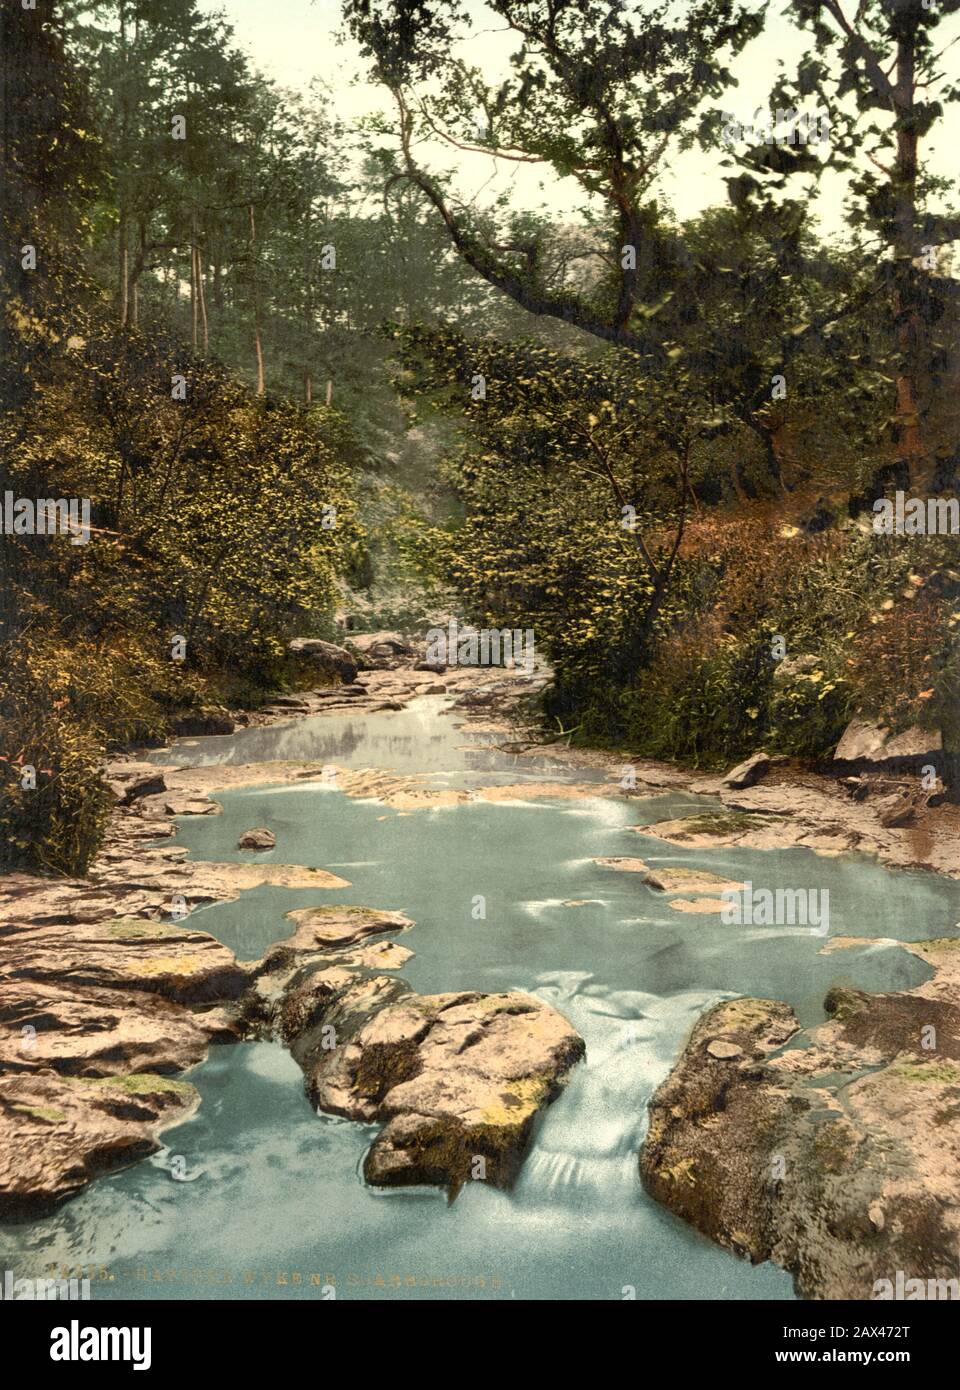 1905  ca. , SCARBOROUGH , North Yorkshire , GREAT BRITAIN  : The Hayburn Wyke . Phocrom print colors edited by Detroit Publishing Co.  -  GRAND BRETAGNA  - VIEW -  ITALIA - FOTO STORICHE - HISTORY - GEOGRAFIA - GEOGRAPHY  -   - PANORAMA  - BELLE EPOQUE - fiume - river - ruscello di montagna  ----  Archivio GBB Stock Photo